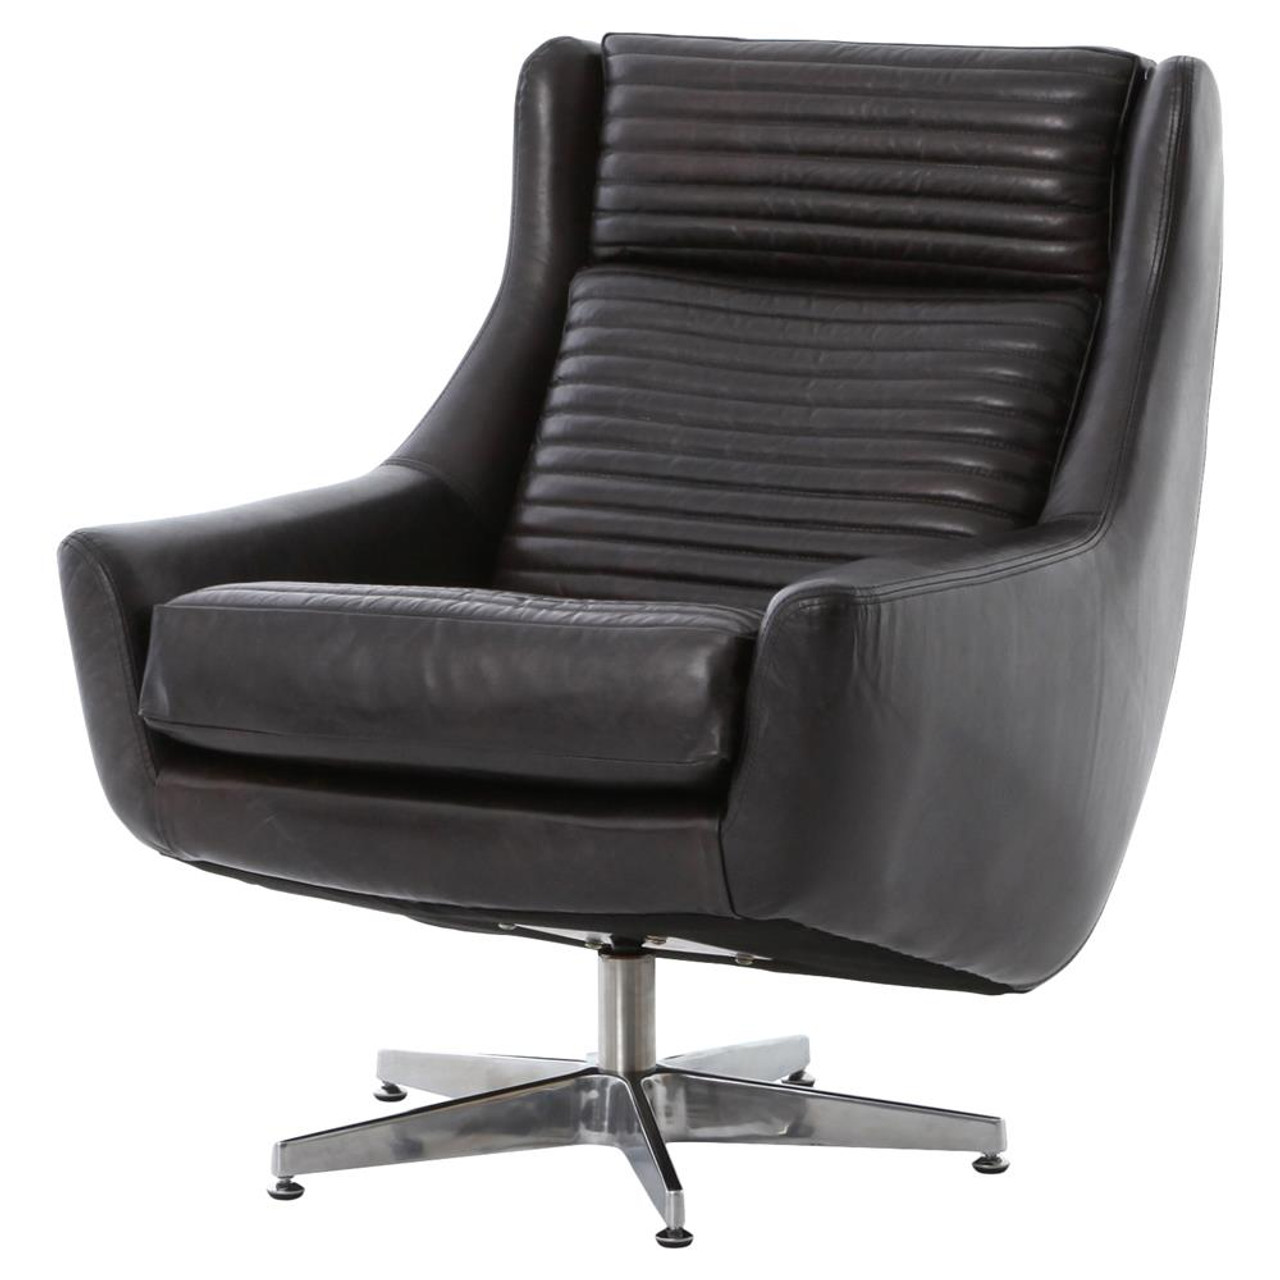 English Charles Black Leather Swivel Chair Zin Home